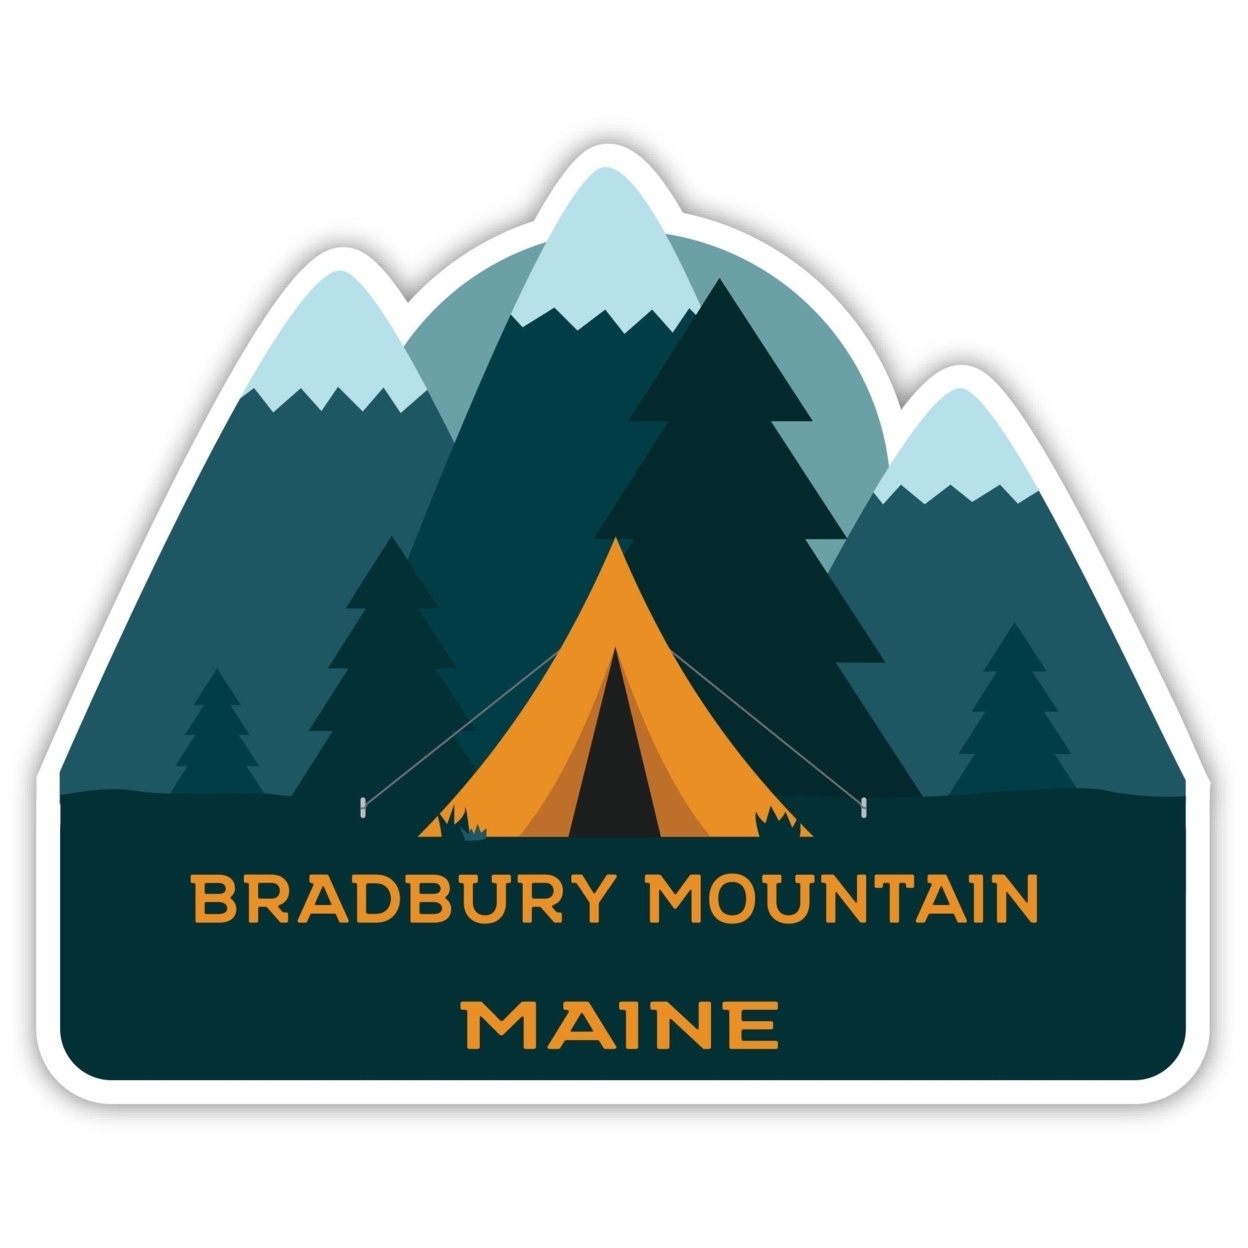 Bradbury Mountain Maine Souvenir Decorative Stickers (Choose Theme And Size) - 4-Pack, 8-Inch, Tent